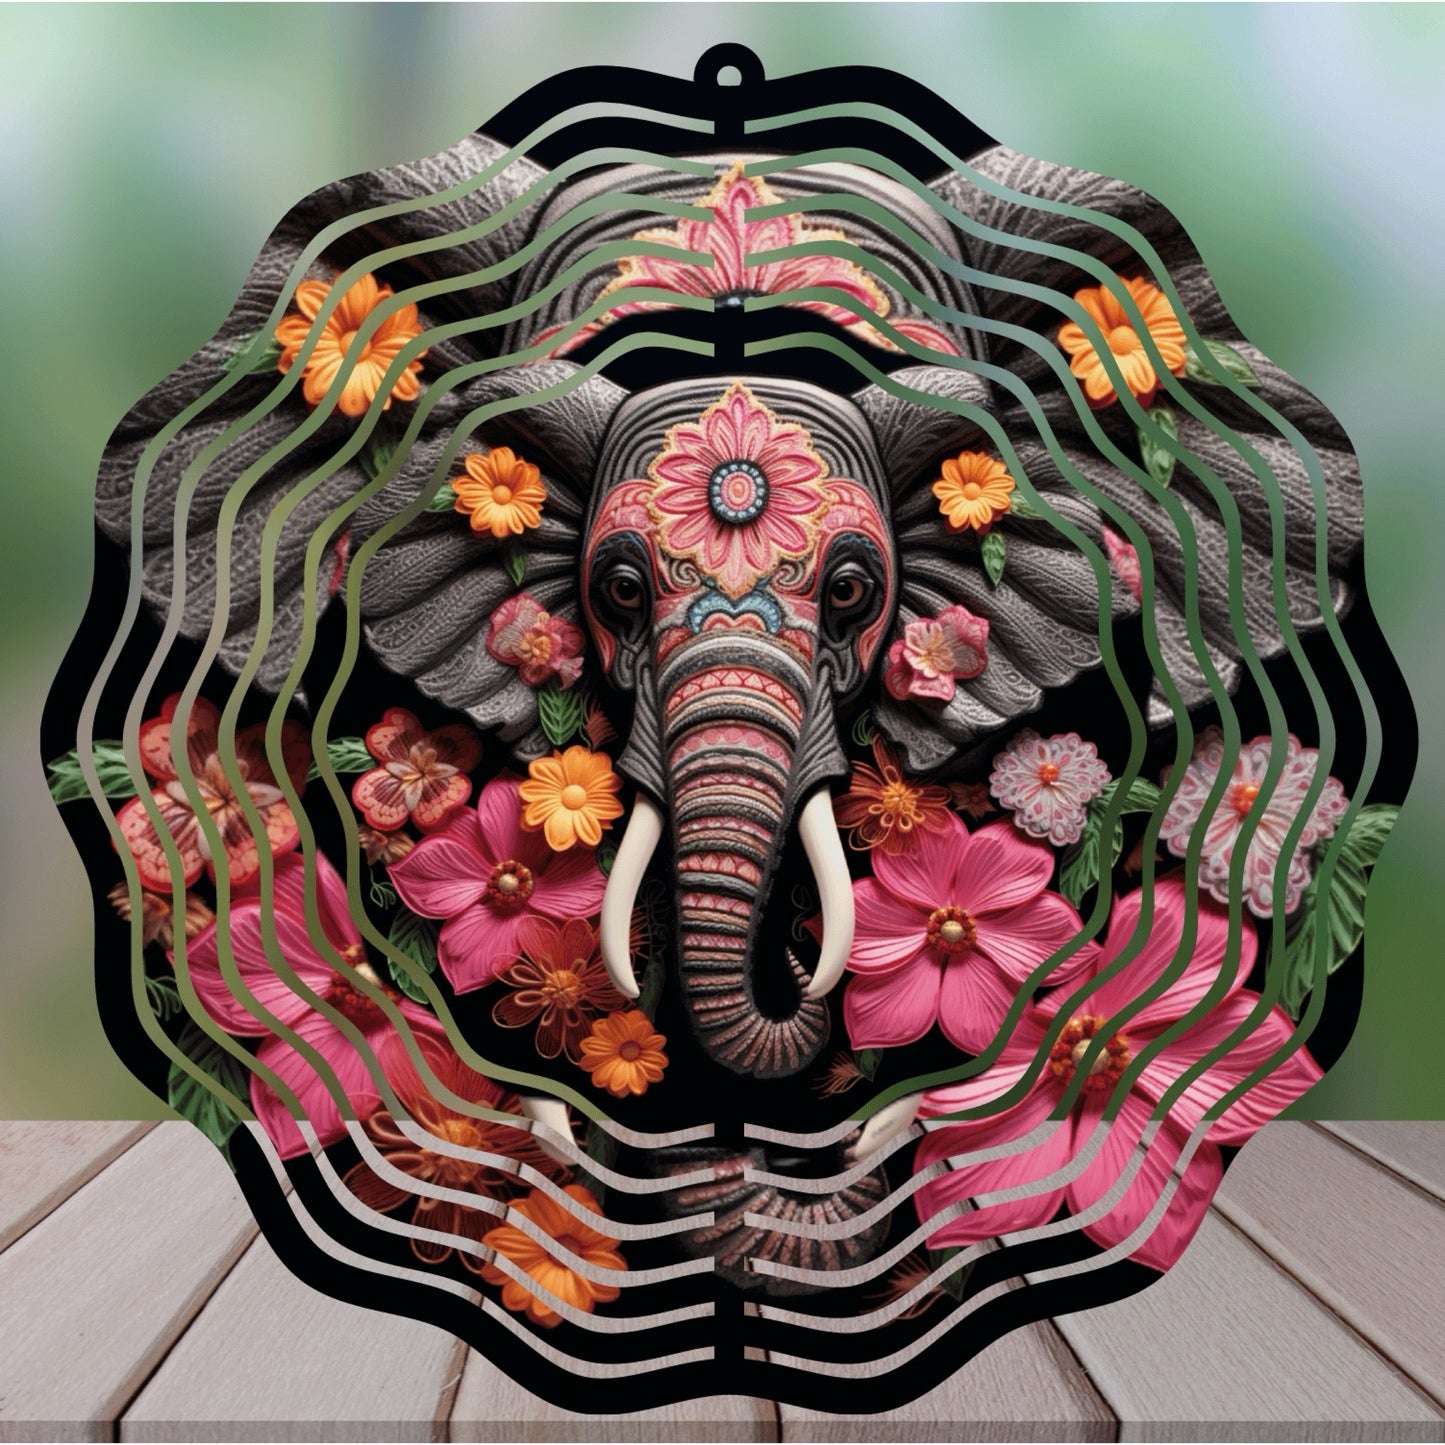 "Enchanted Elephant" 8" Round Handmade Sublimated Wind Spinner - Unique Garden Decor